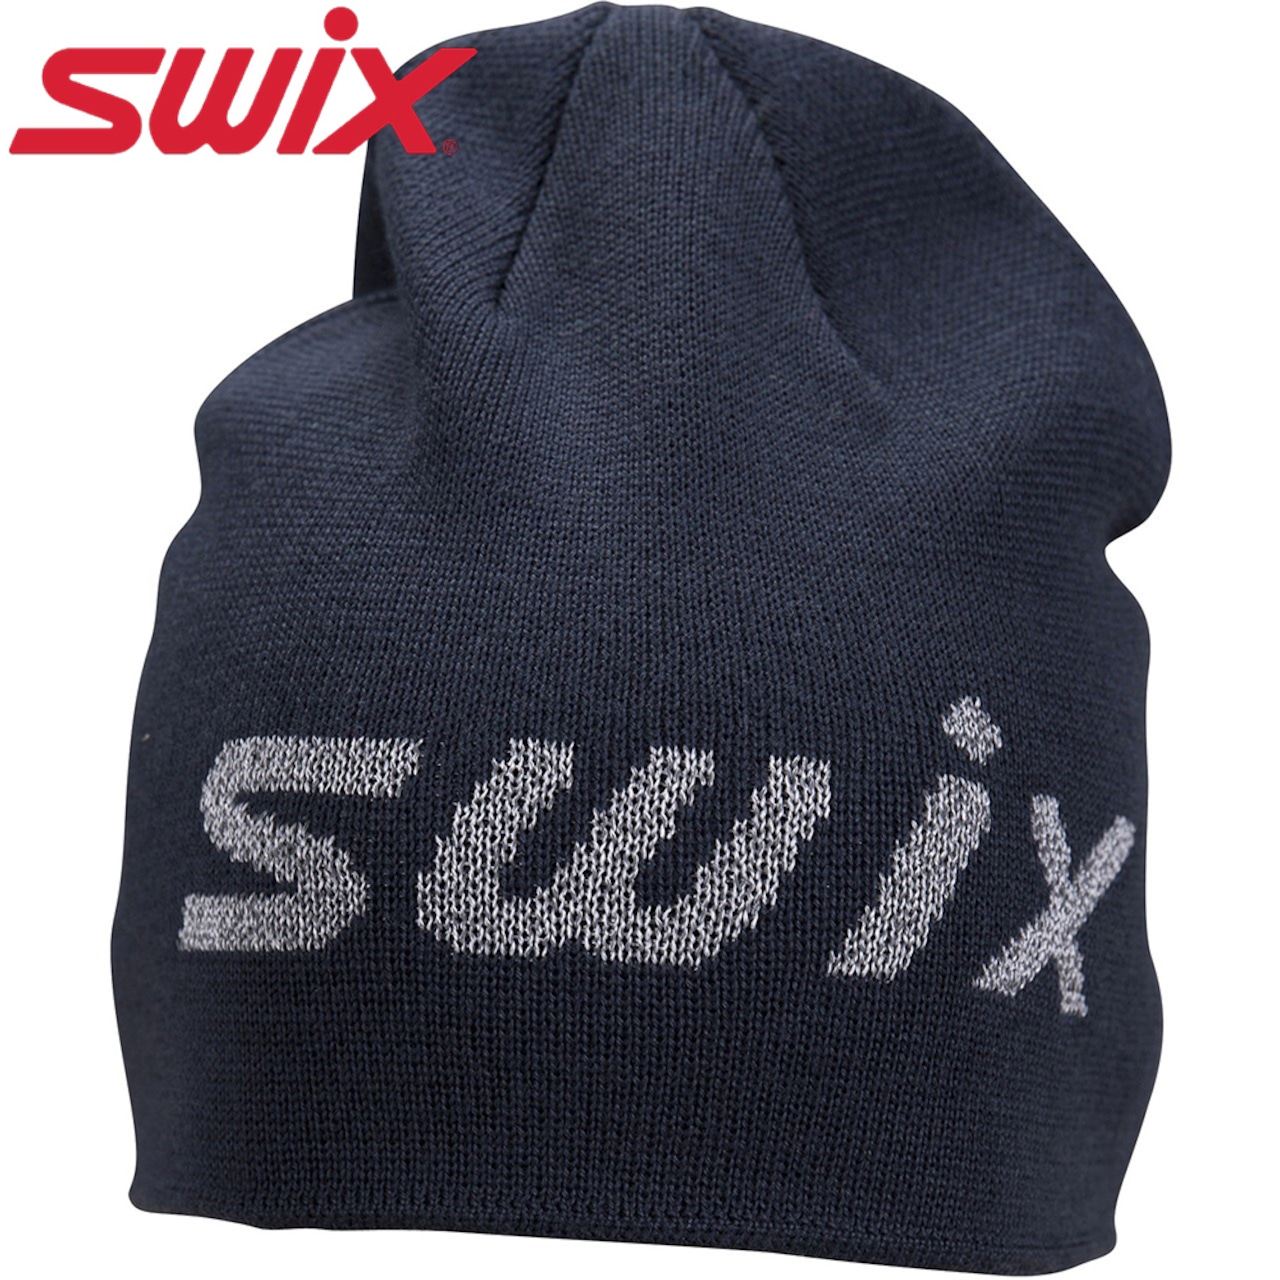 Swix スウィックス クロスカントリー スキー クロカン ロゴ ハット ニット帽 ニットキャップ ユニセックス ロゴハット 46649